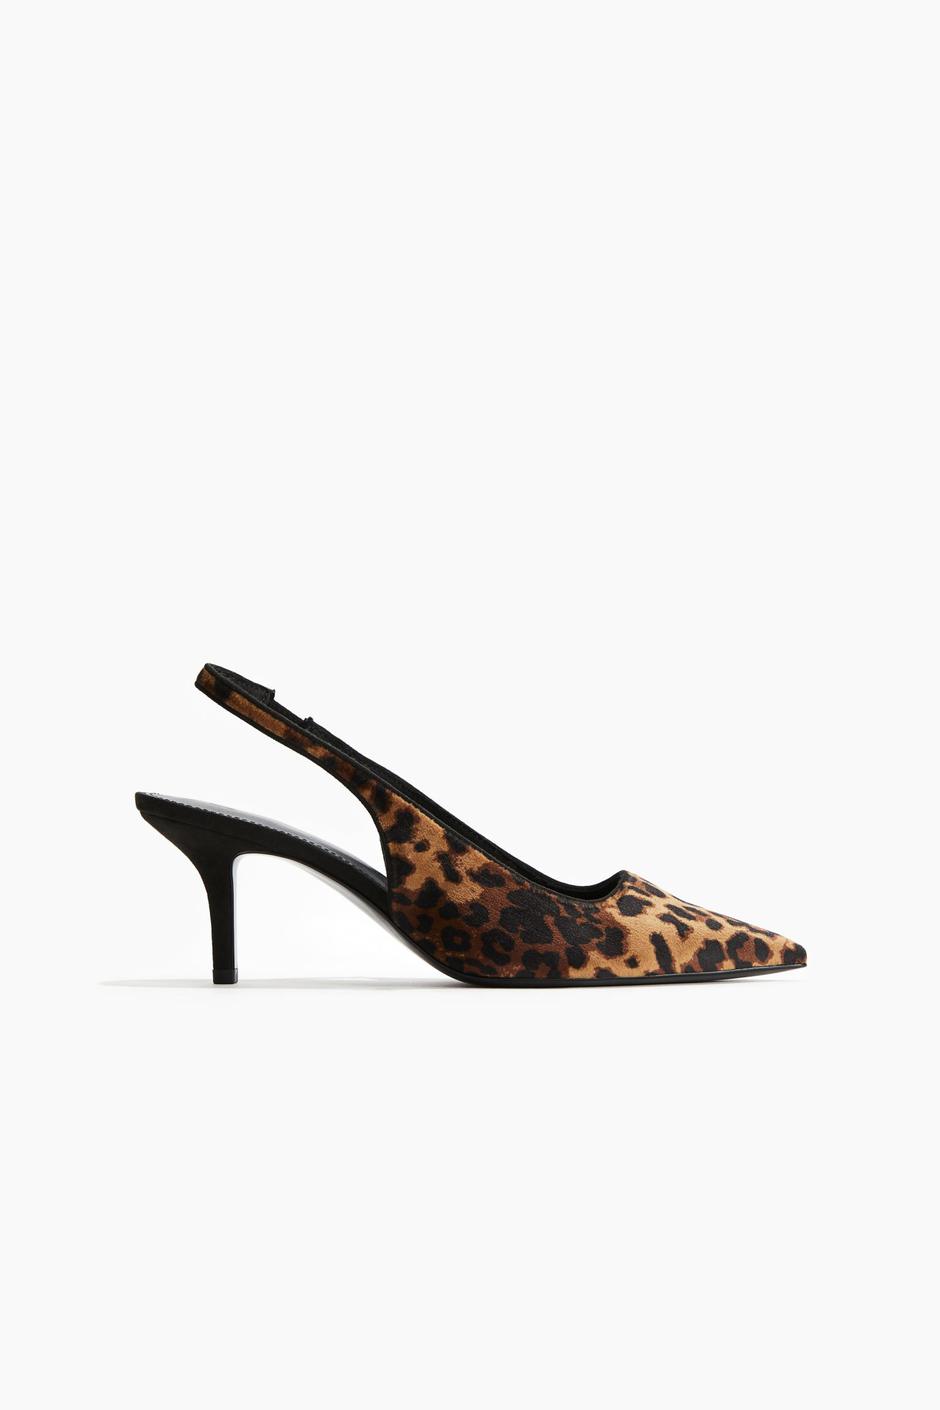 Foto: H&M, cipele s leopard uzorkom (34,99 eura) | Autor: 